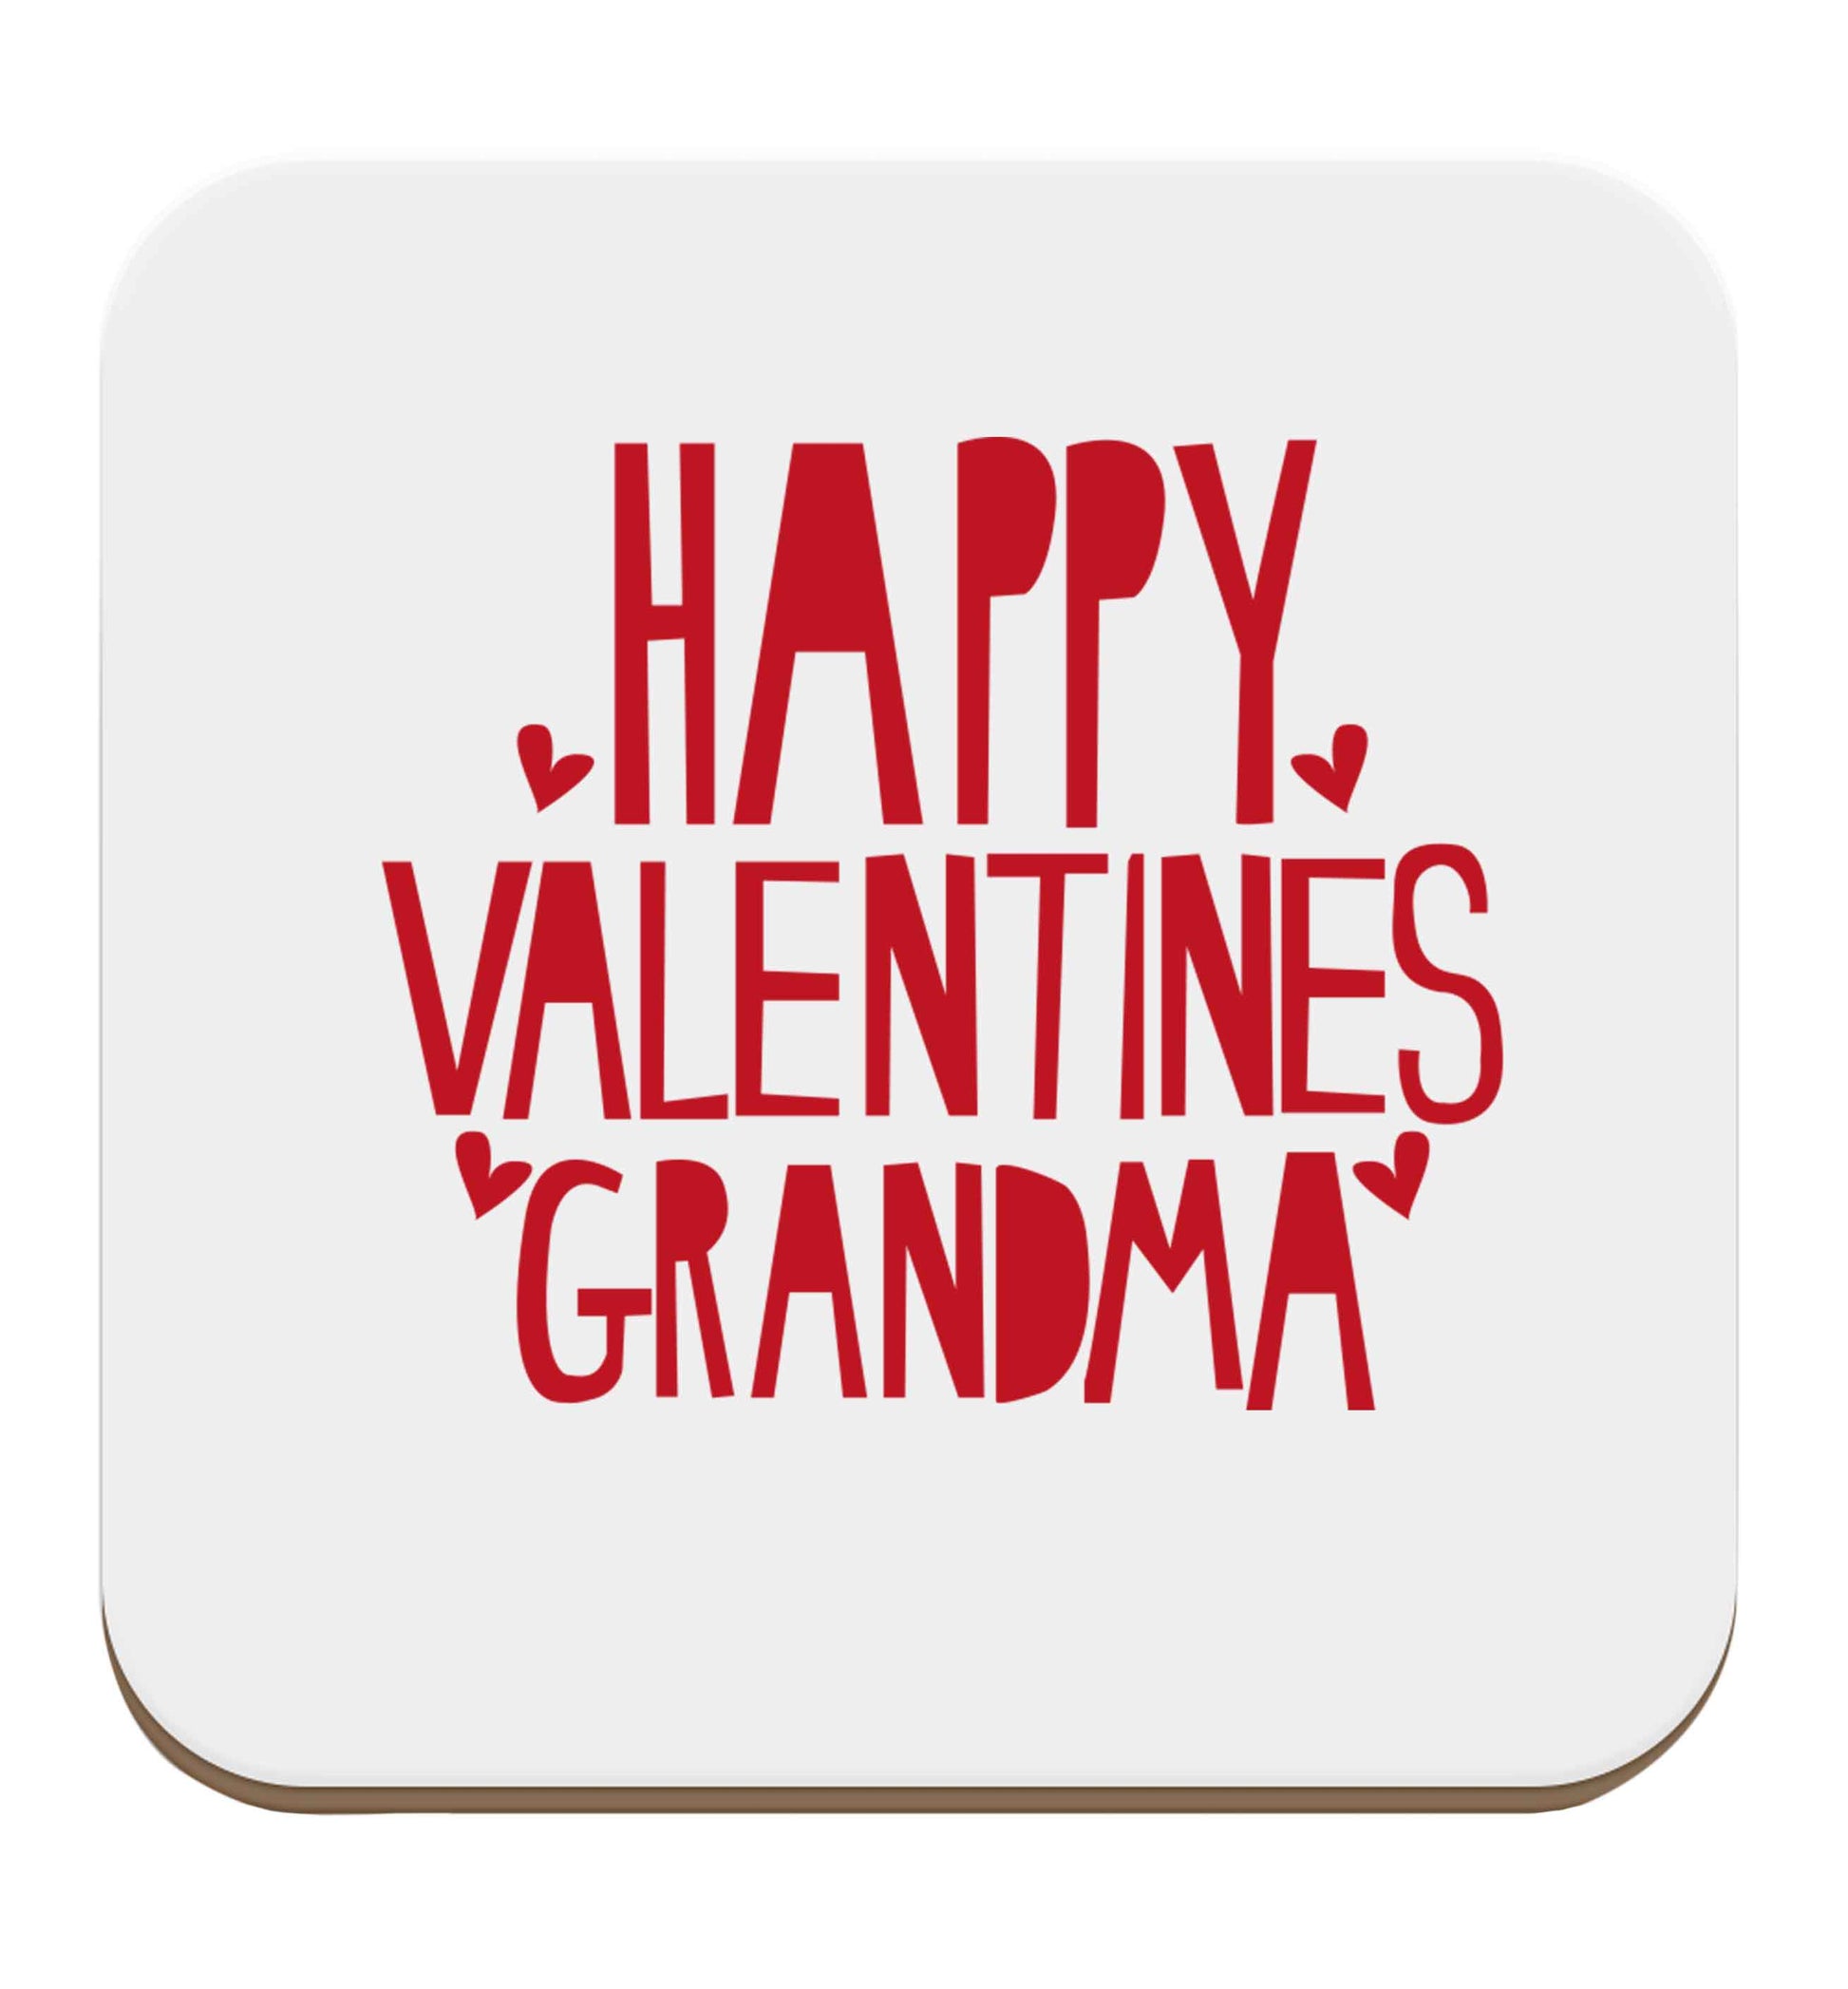 Happy valentines grandma set of four coasters